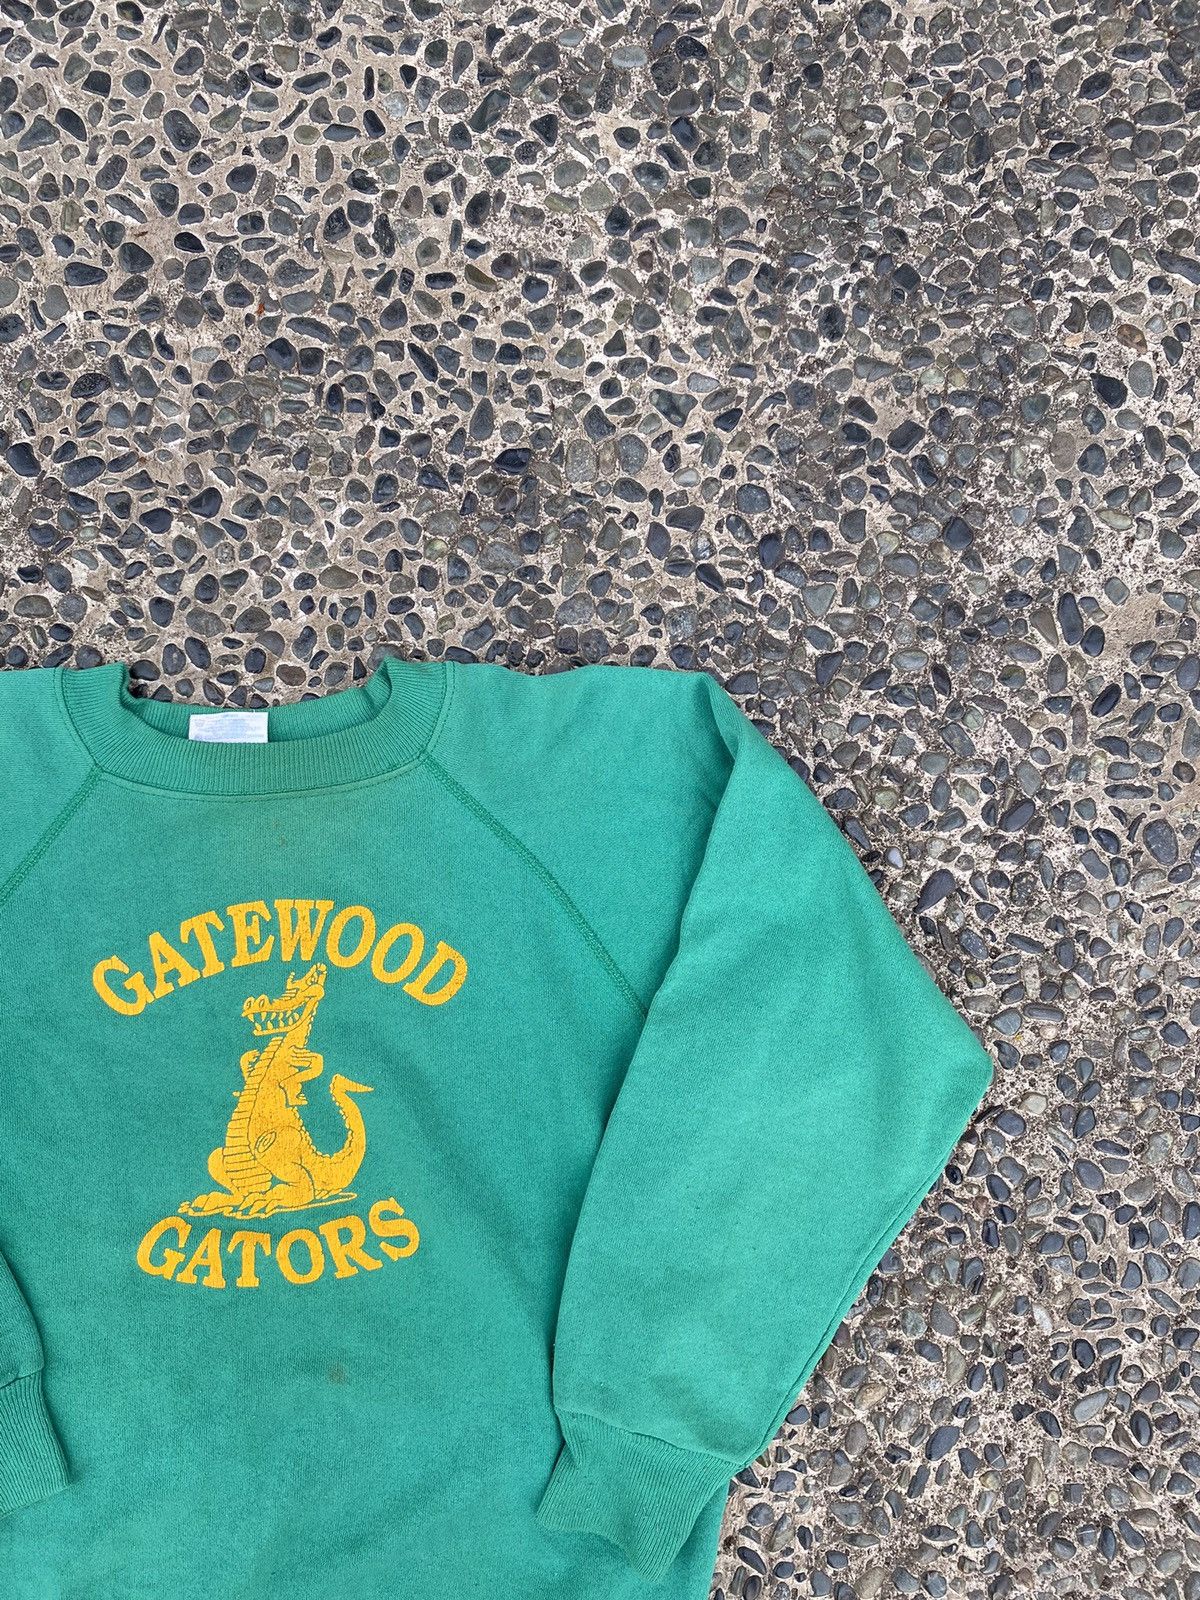 Vintage 90’s Hanes gatewood gators green faded sweatshirts Size US S / EU 44-46 / 1 - 3 Thumbnail